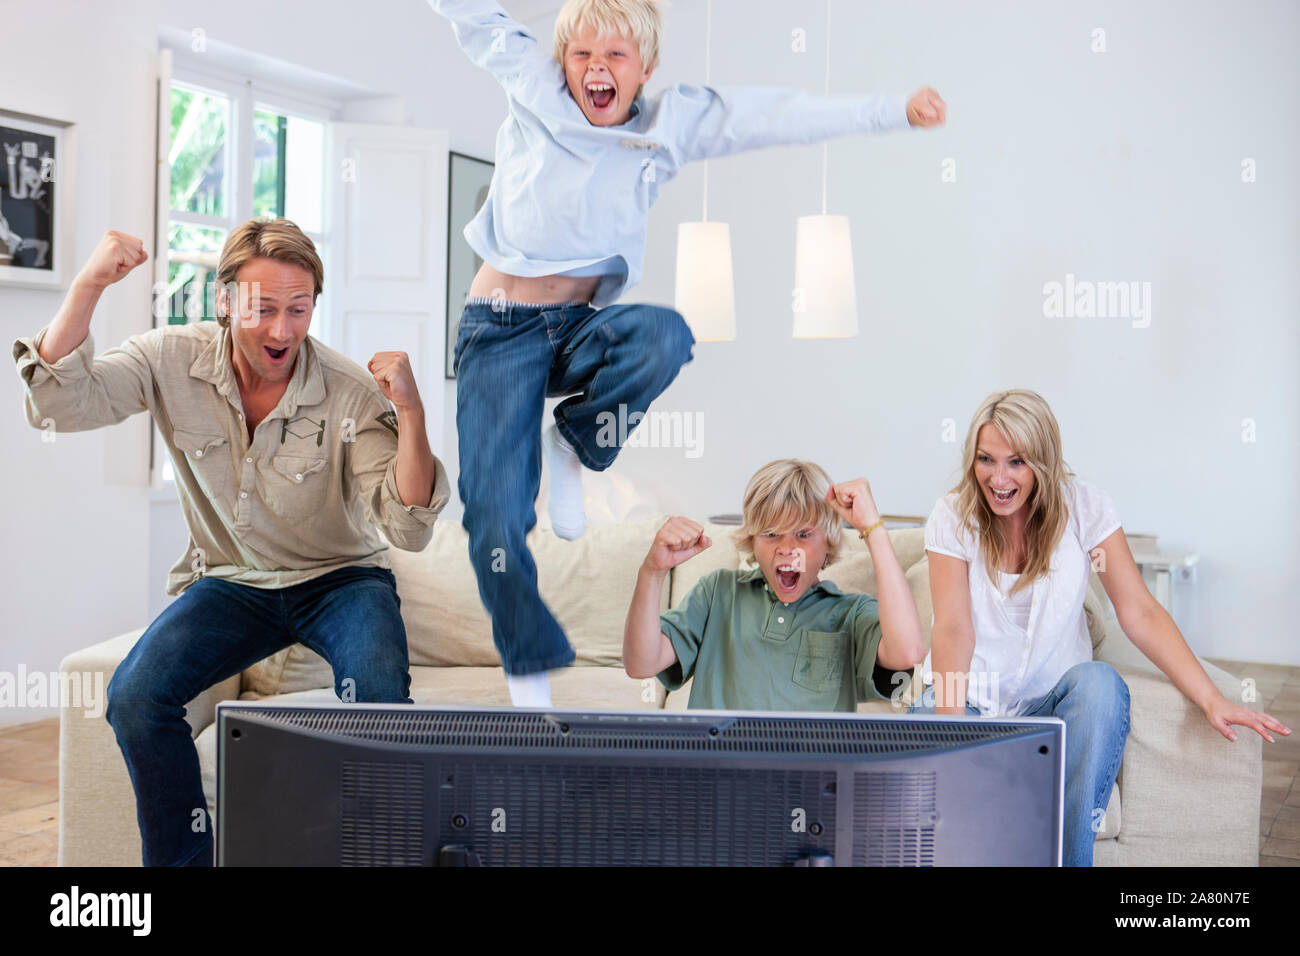 Family celebrating a victory on TV Stock Photo